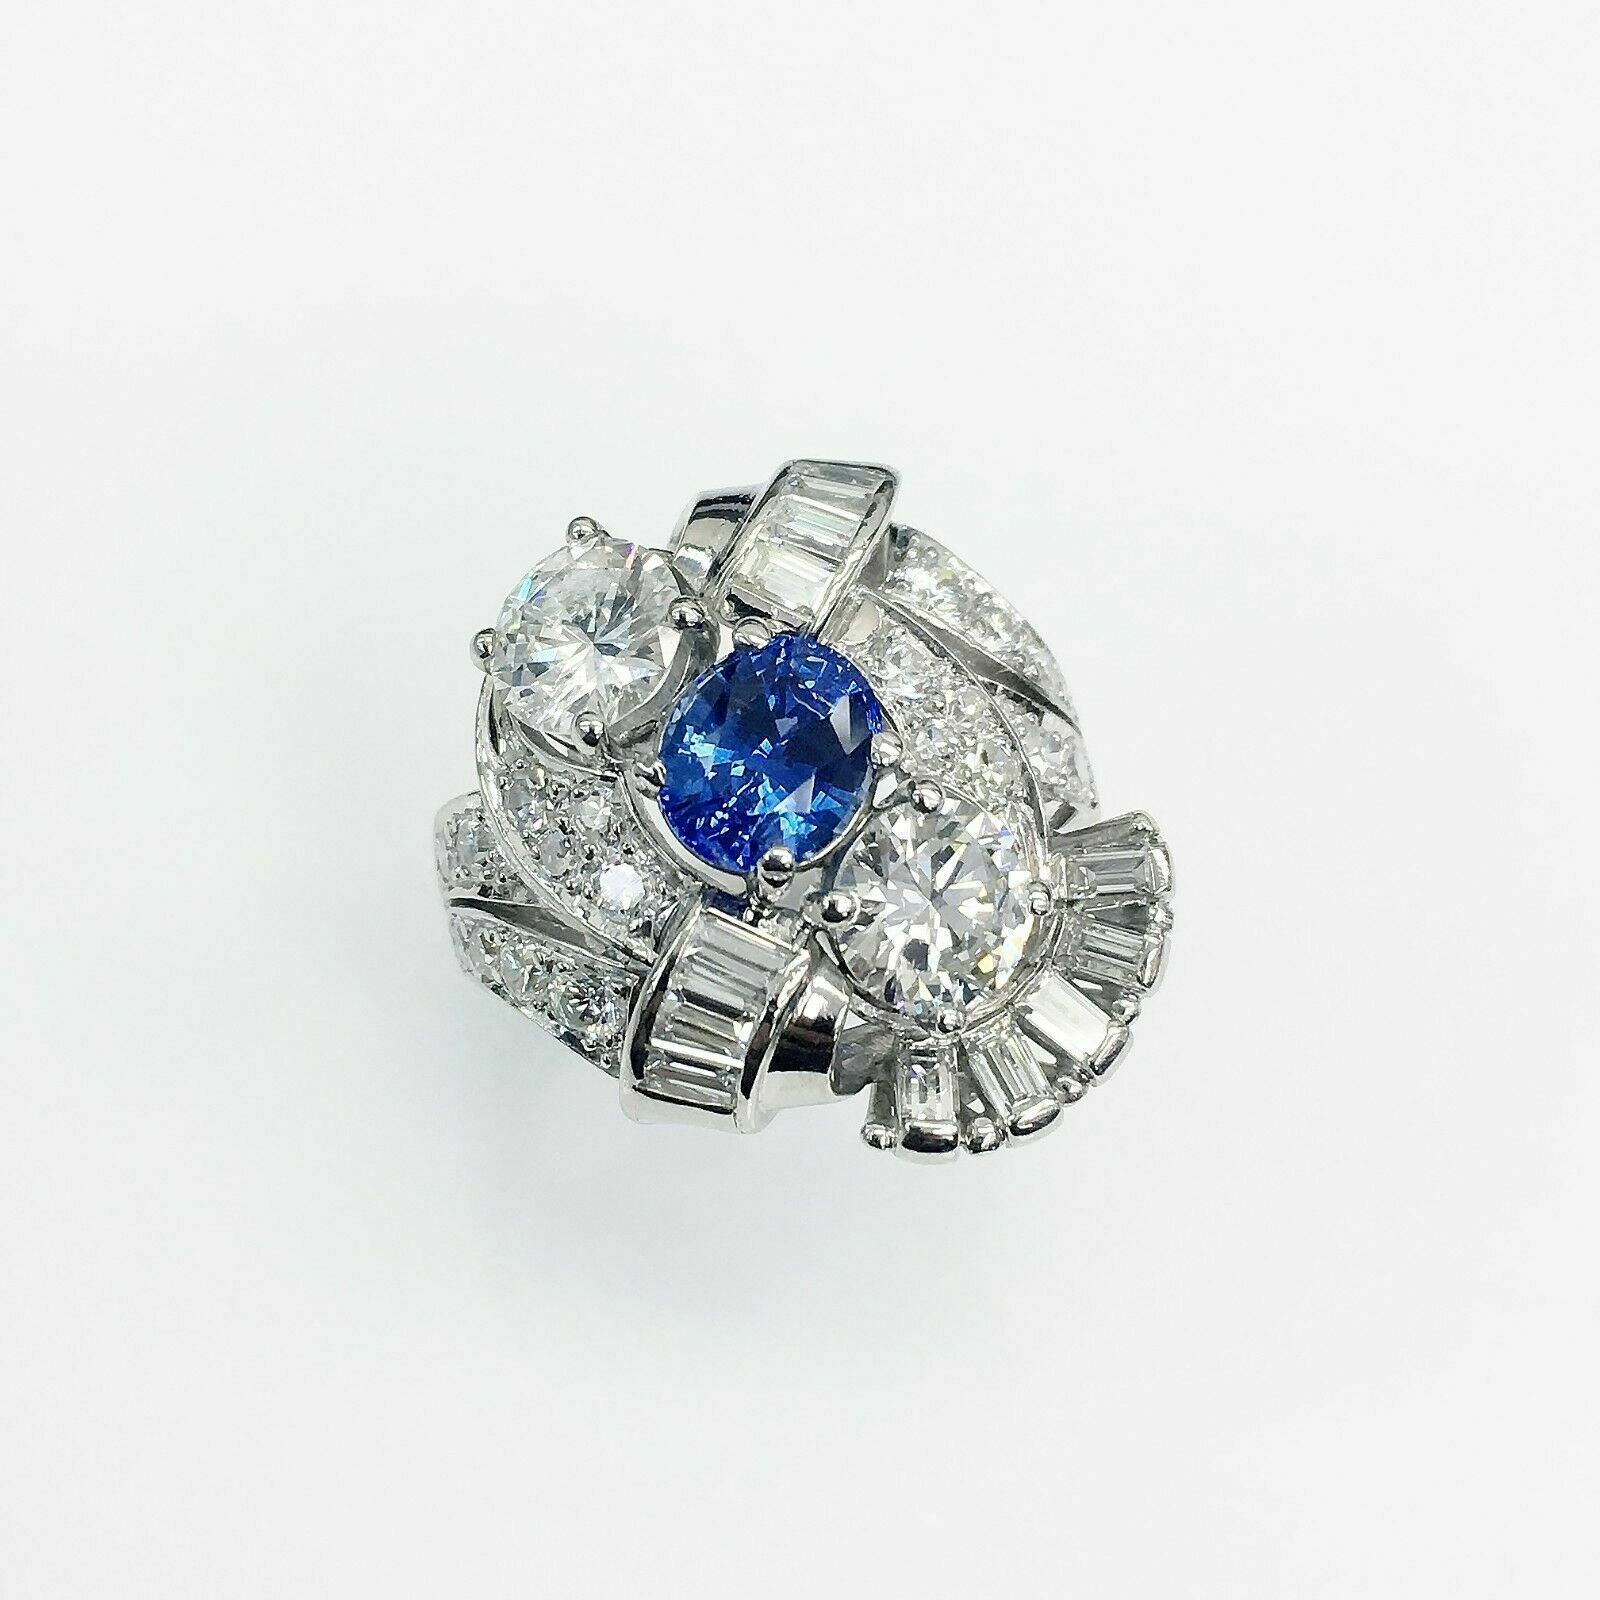 Antique Diamond and Sapphire Wedding/Anniversary Ring Platinum 4.41 Carats t.w.